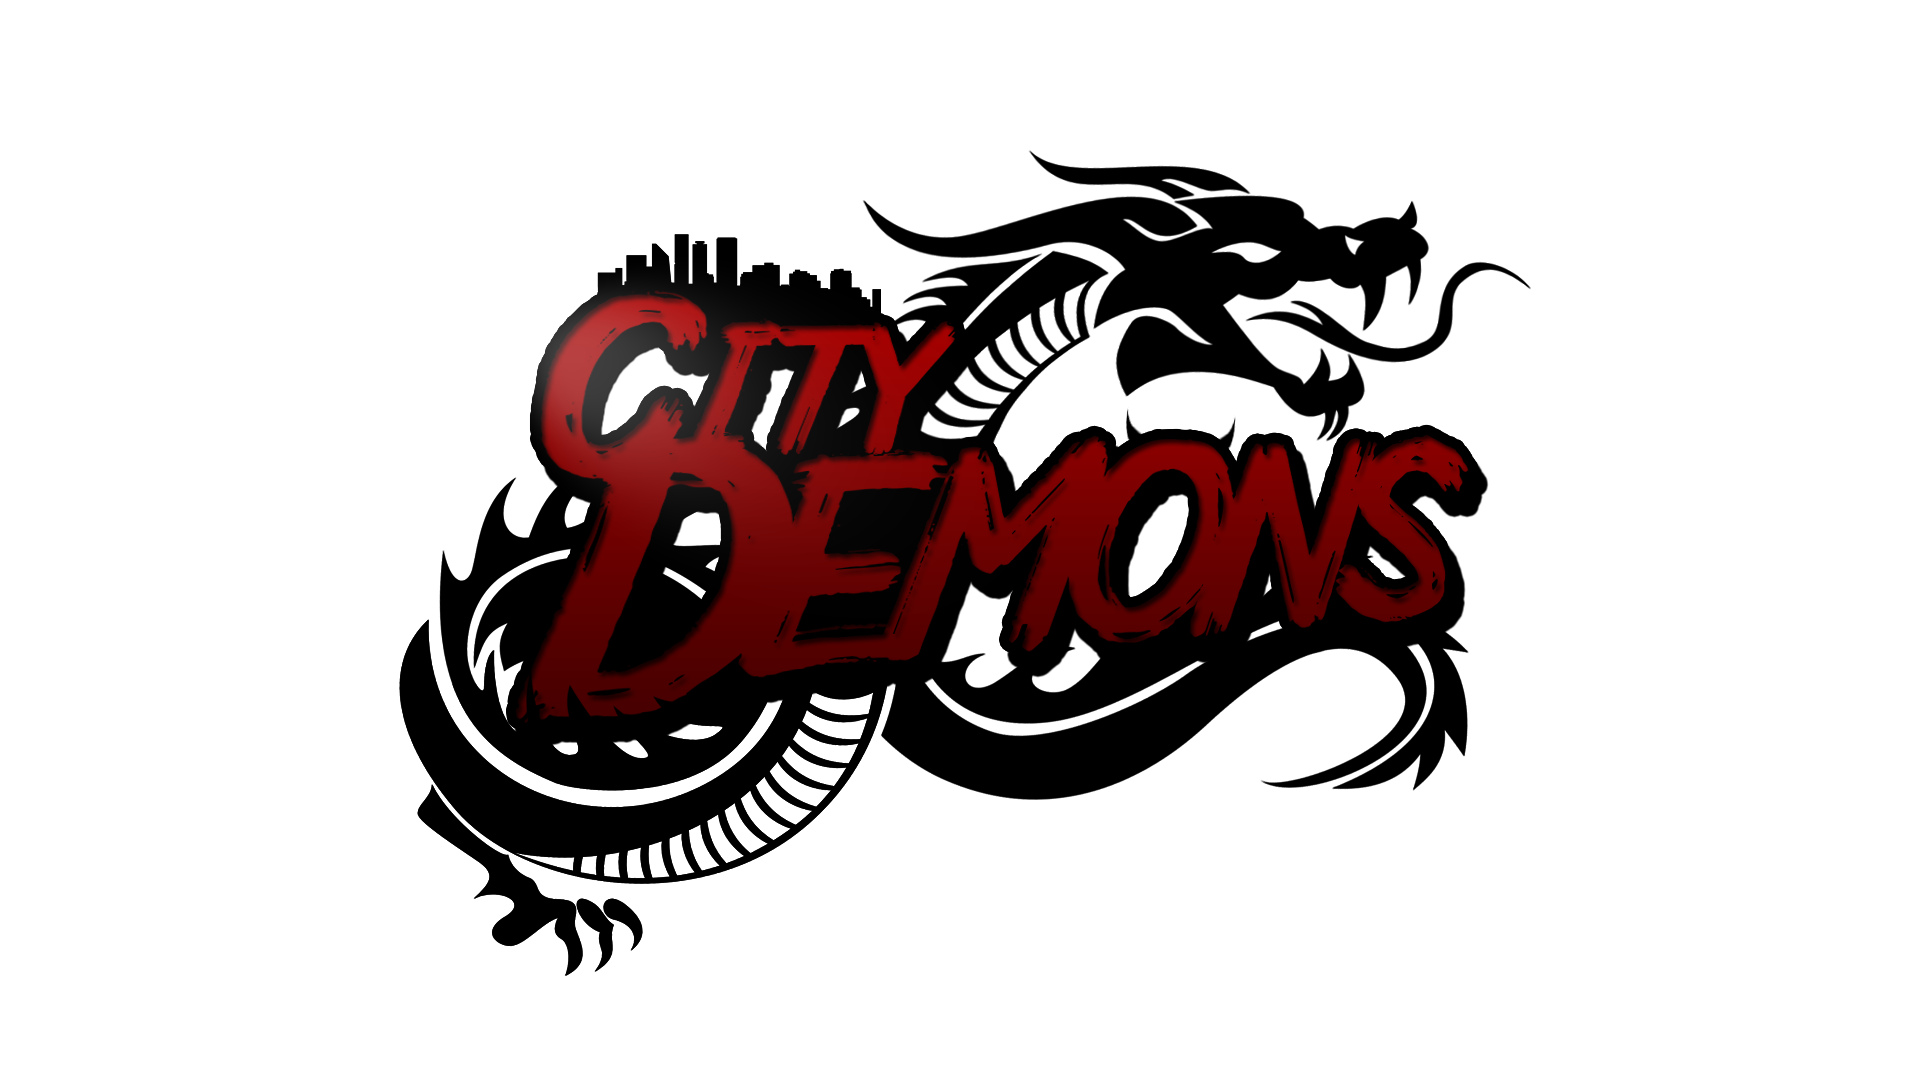 Project City Demons